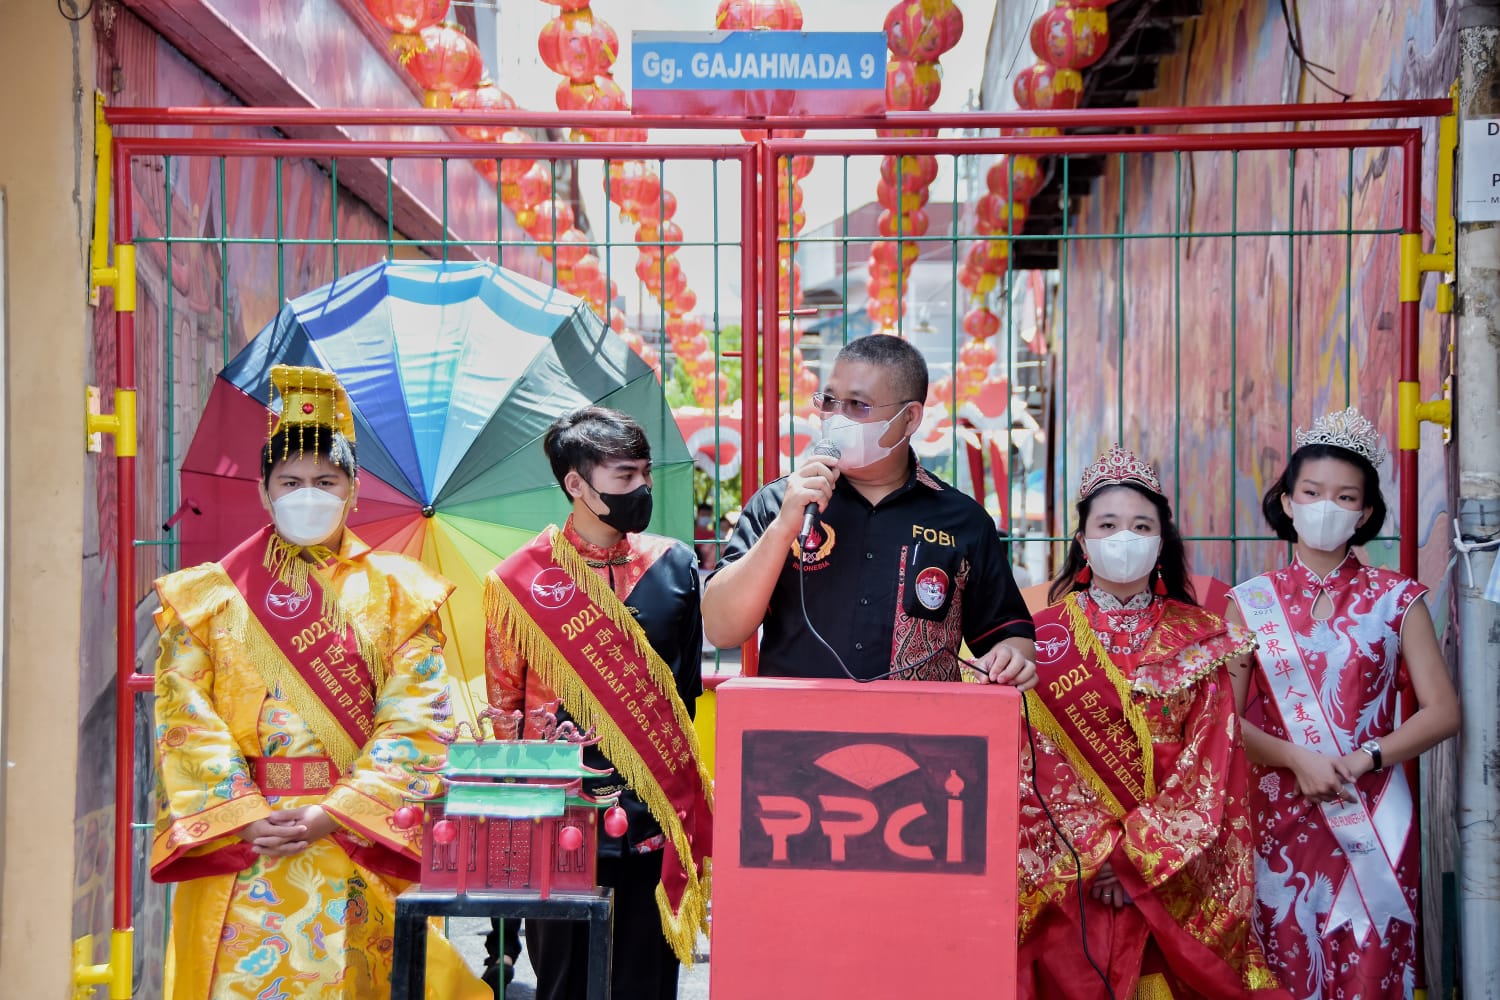 PPCI Pecinan Pontianak Chinatown Indonesia